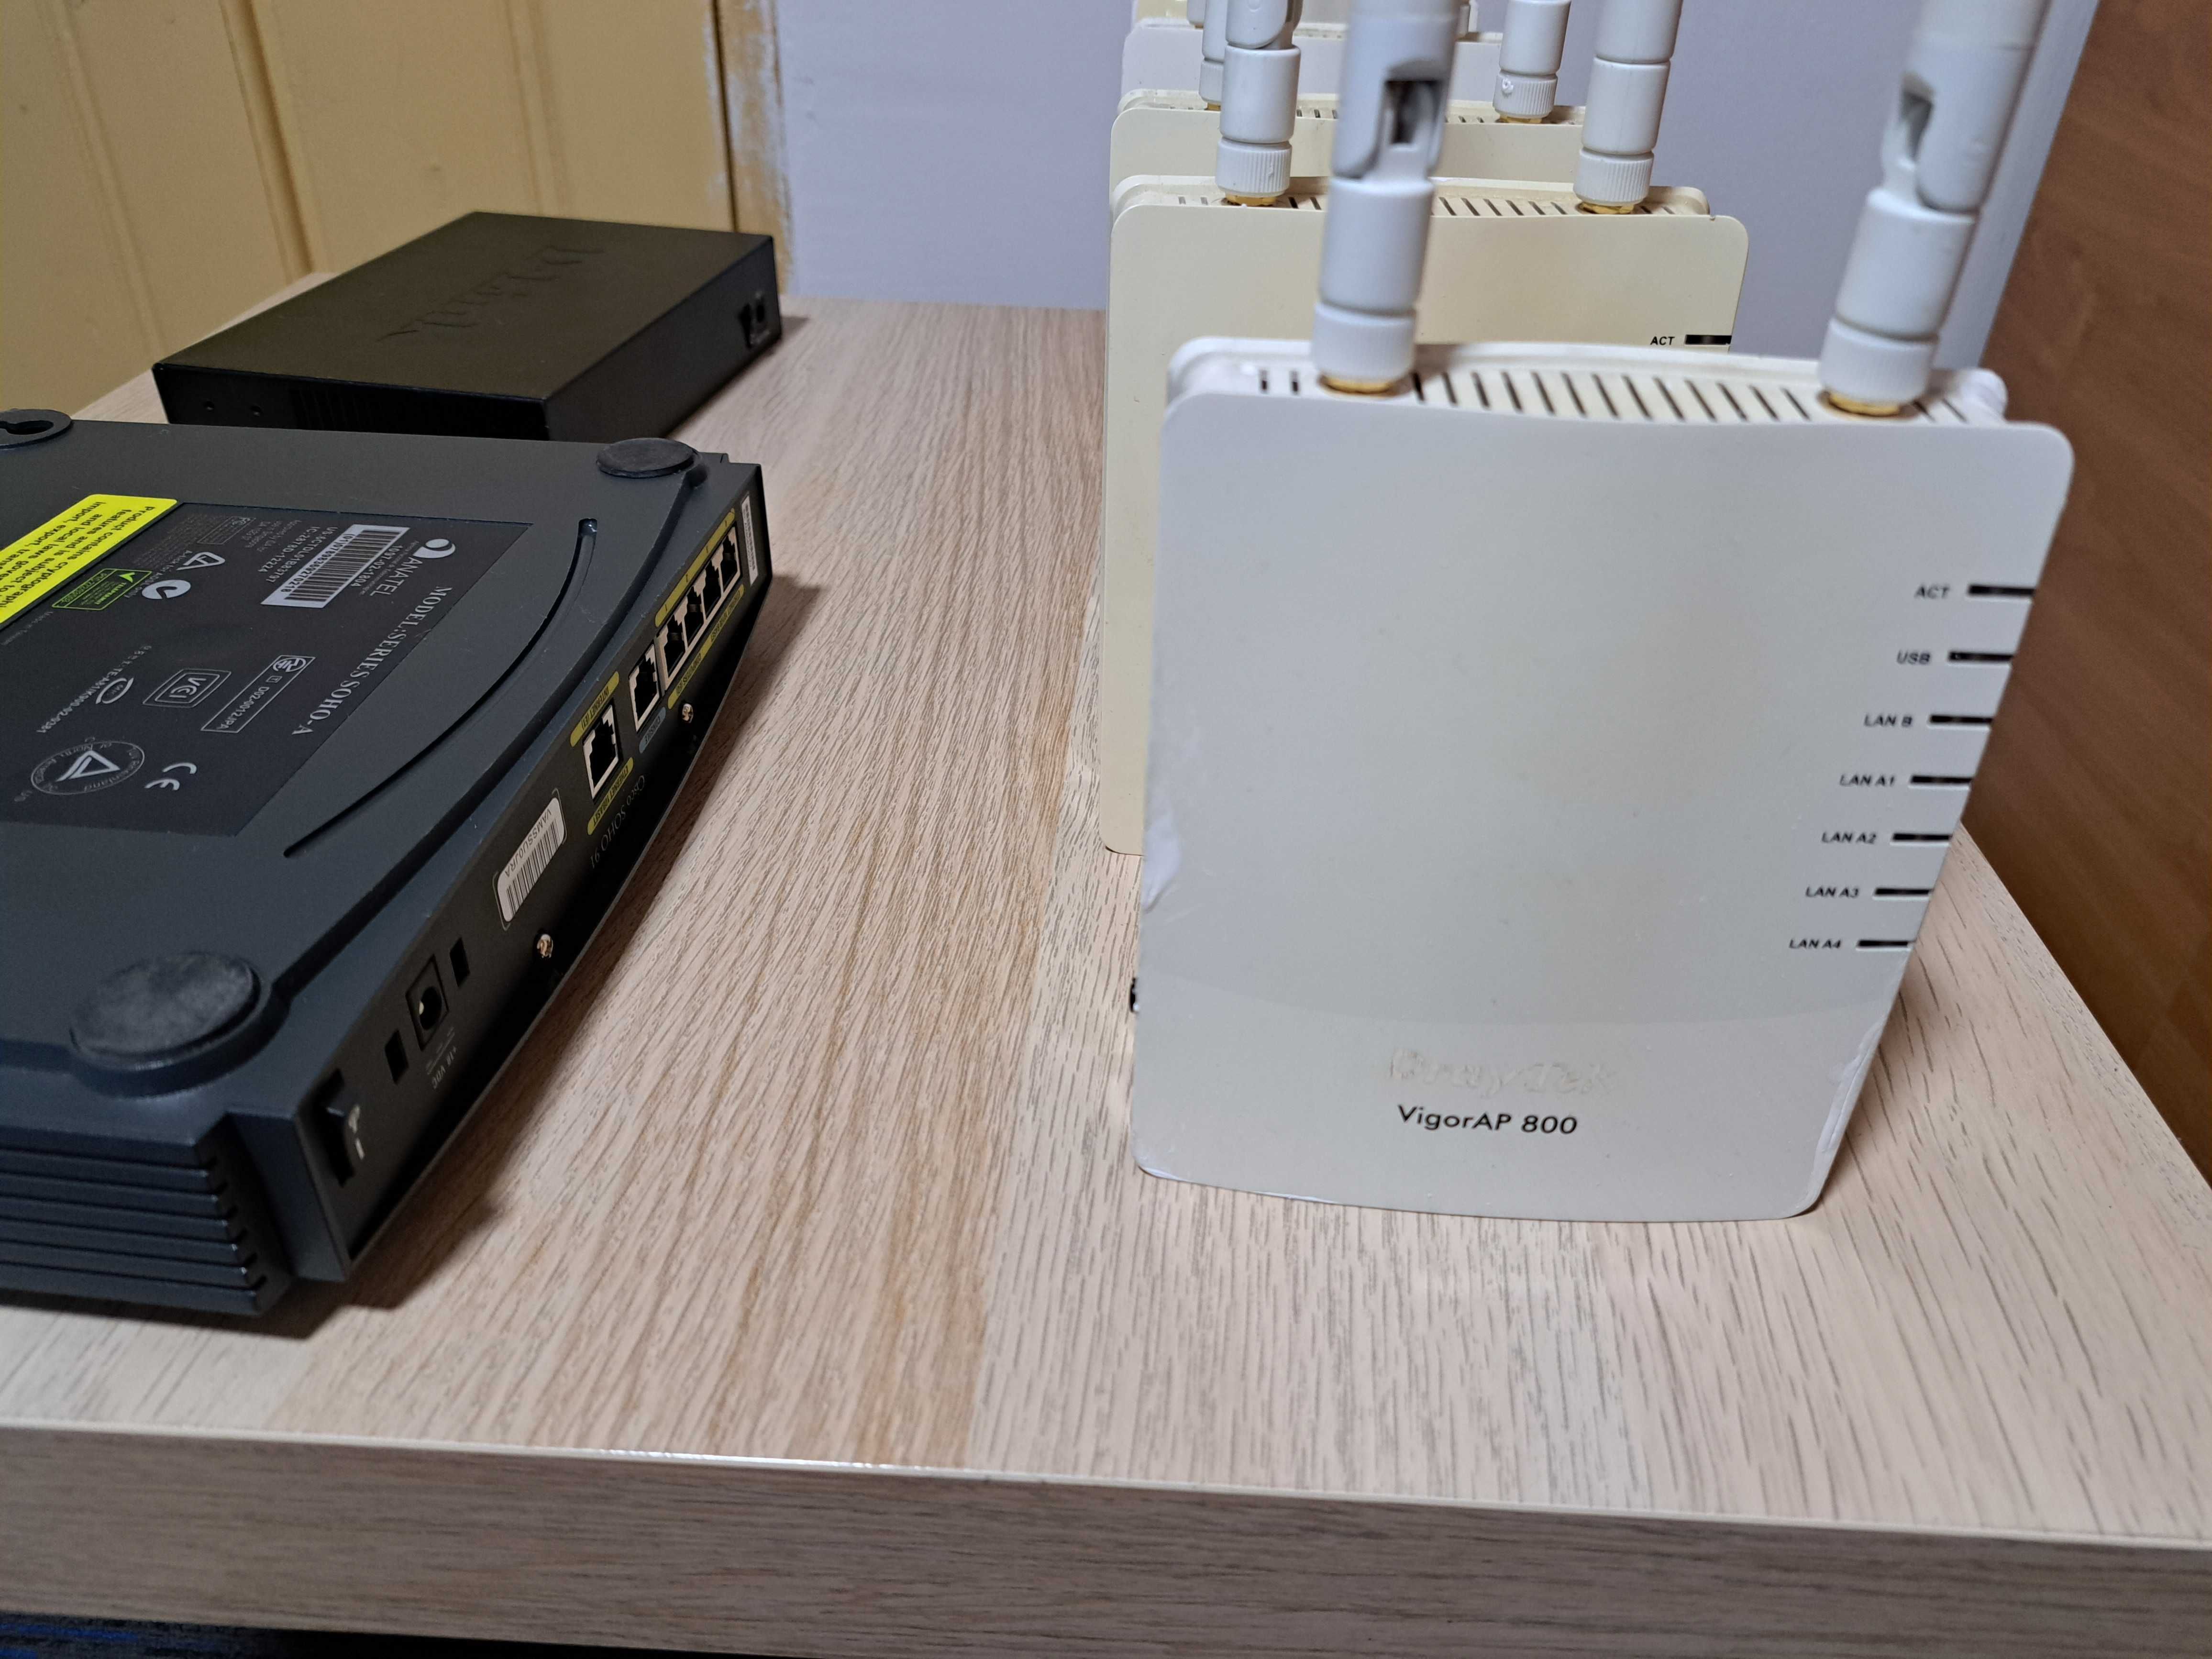 Pachet Switch Poe Dlink+Router Cisco+5 APs Drytech vigor AP